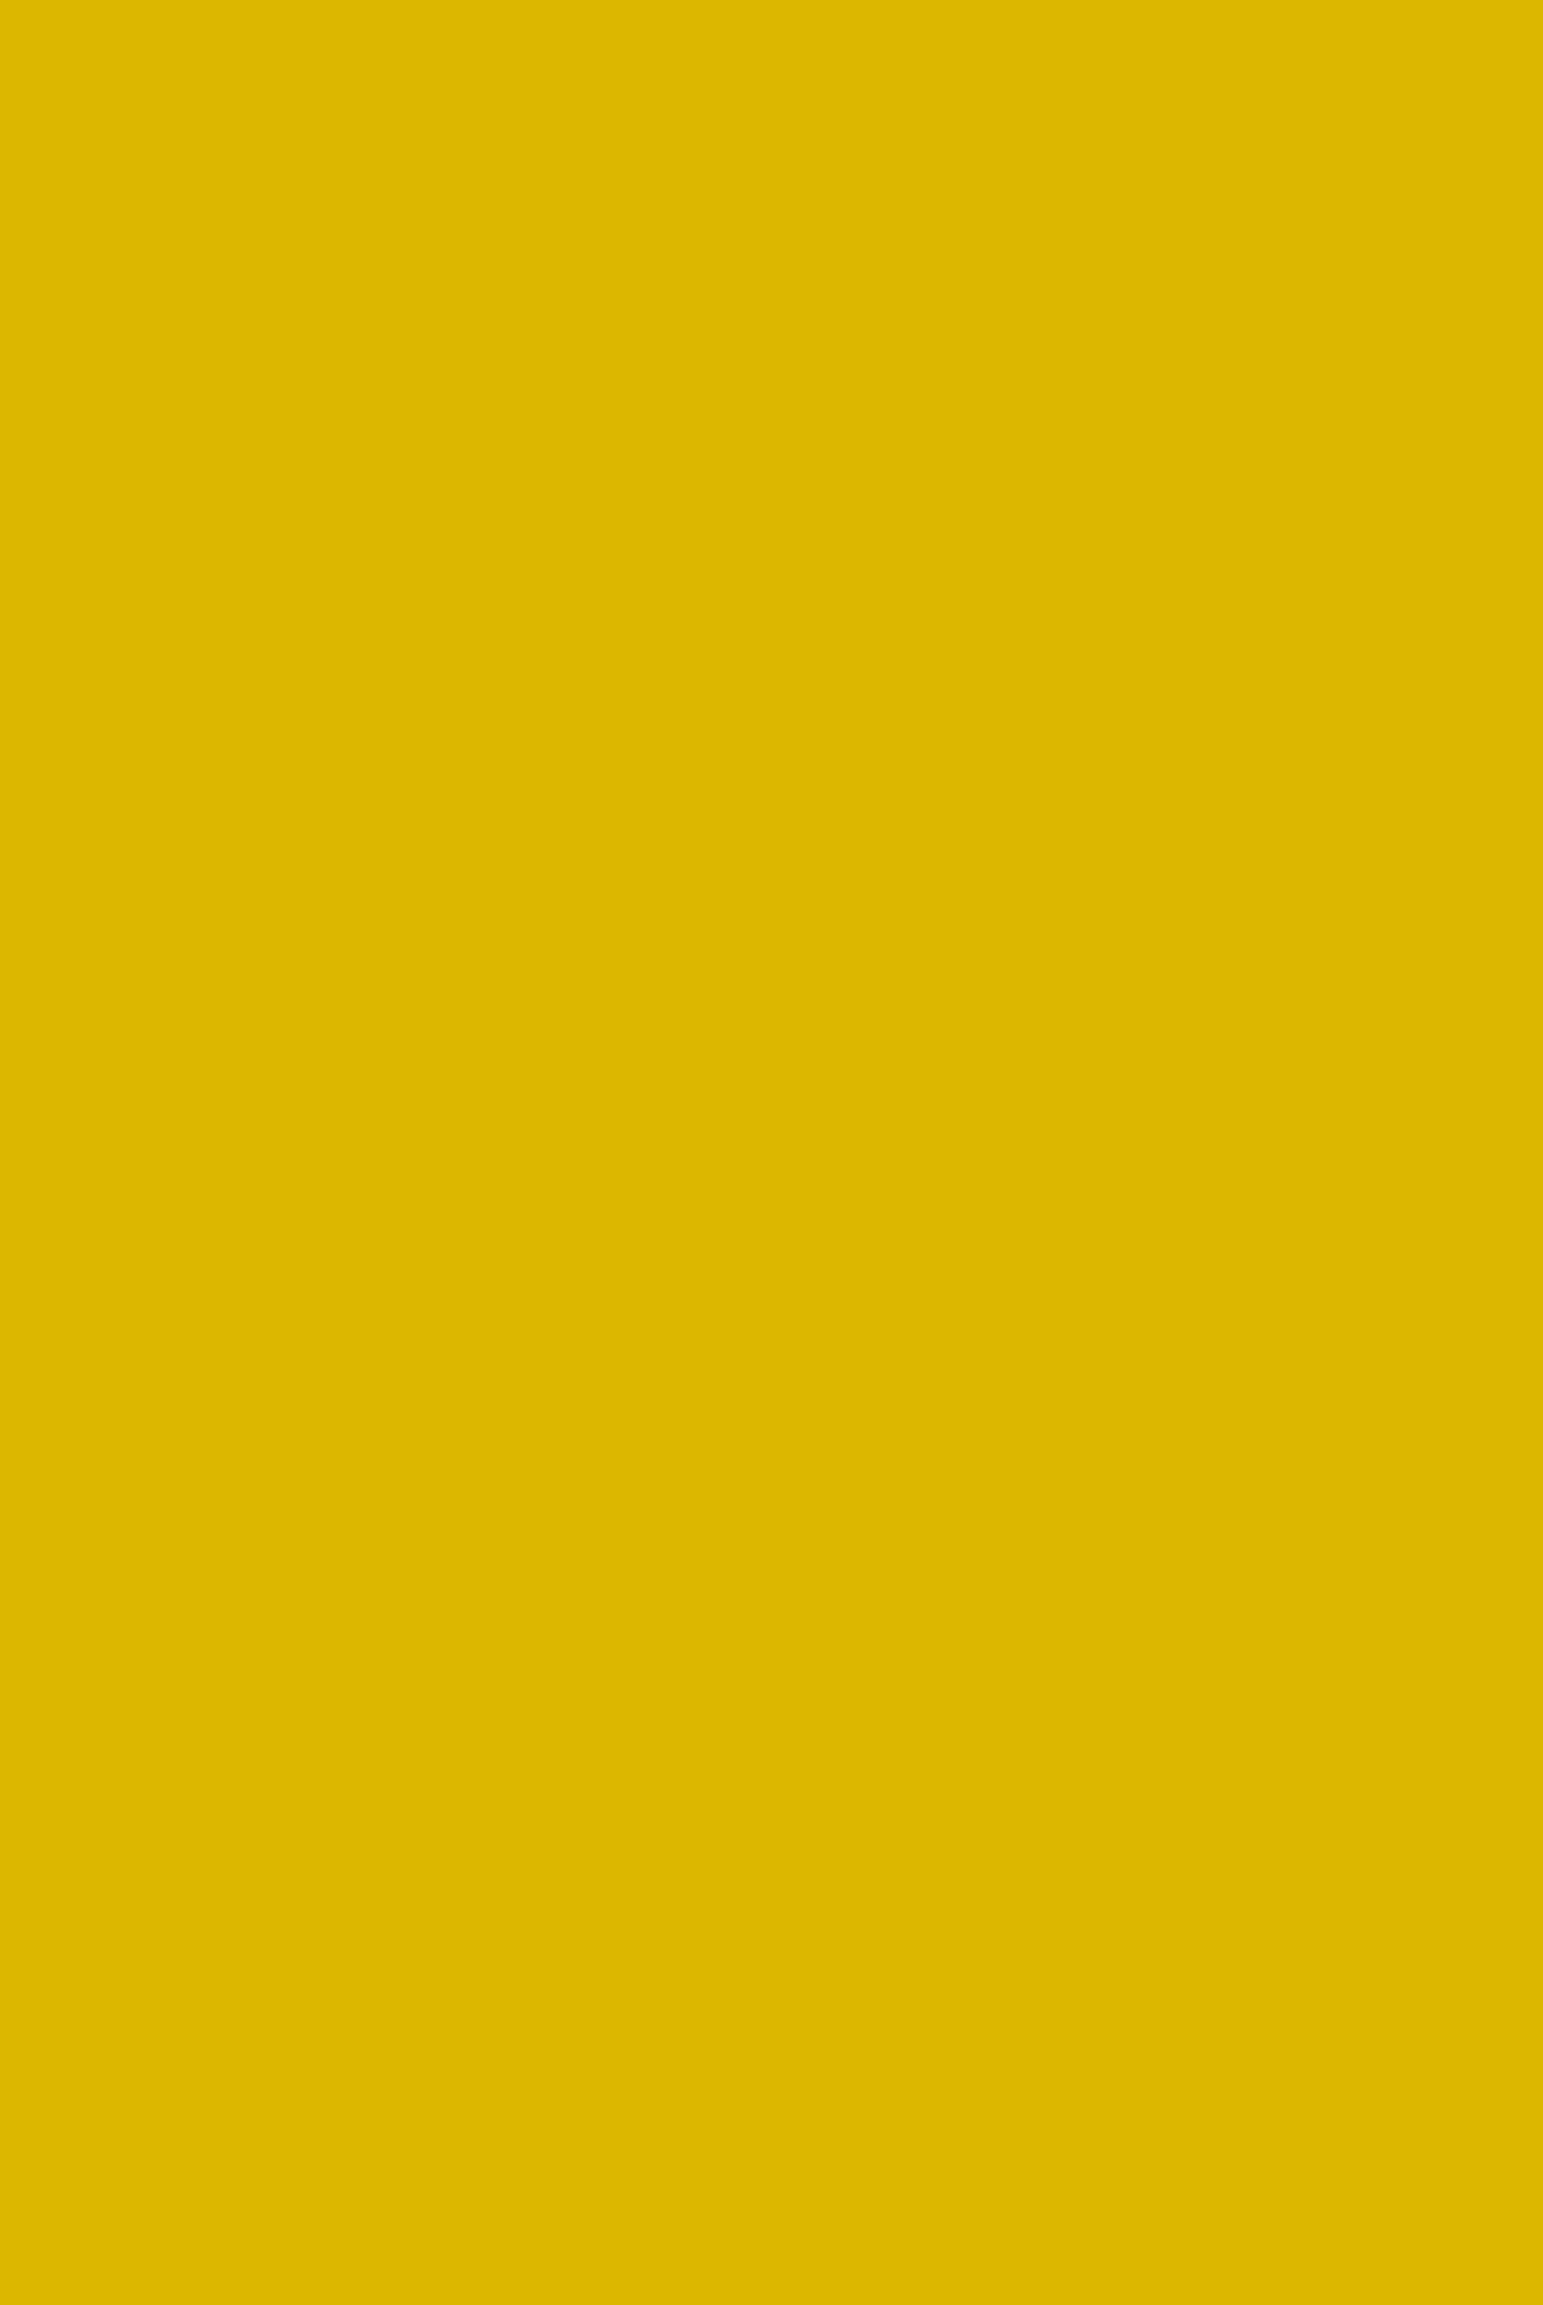 background_yellow